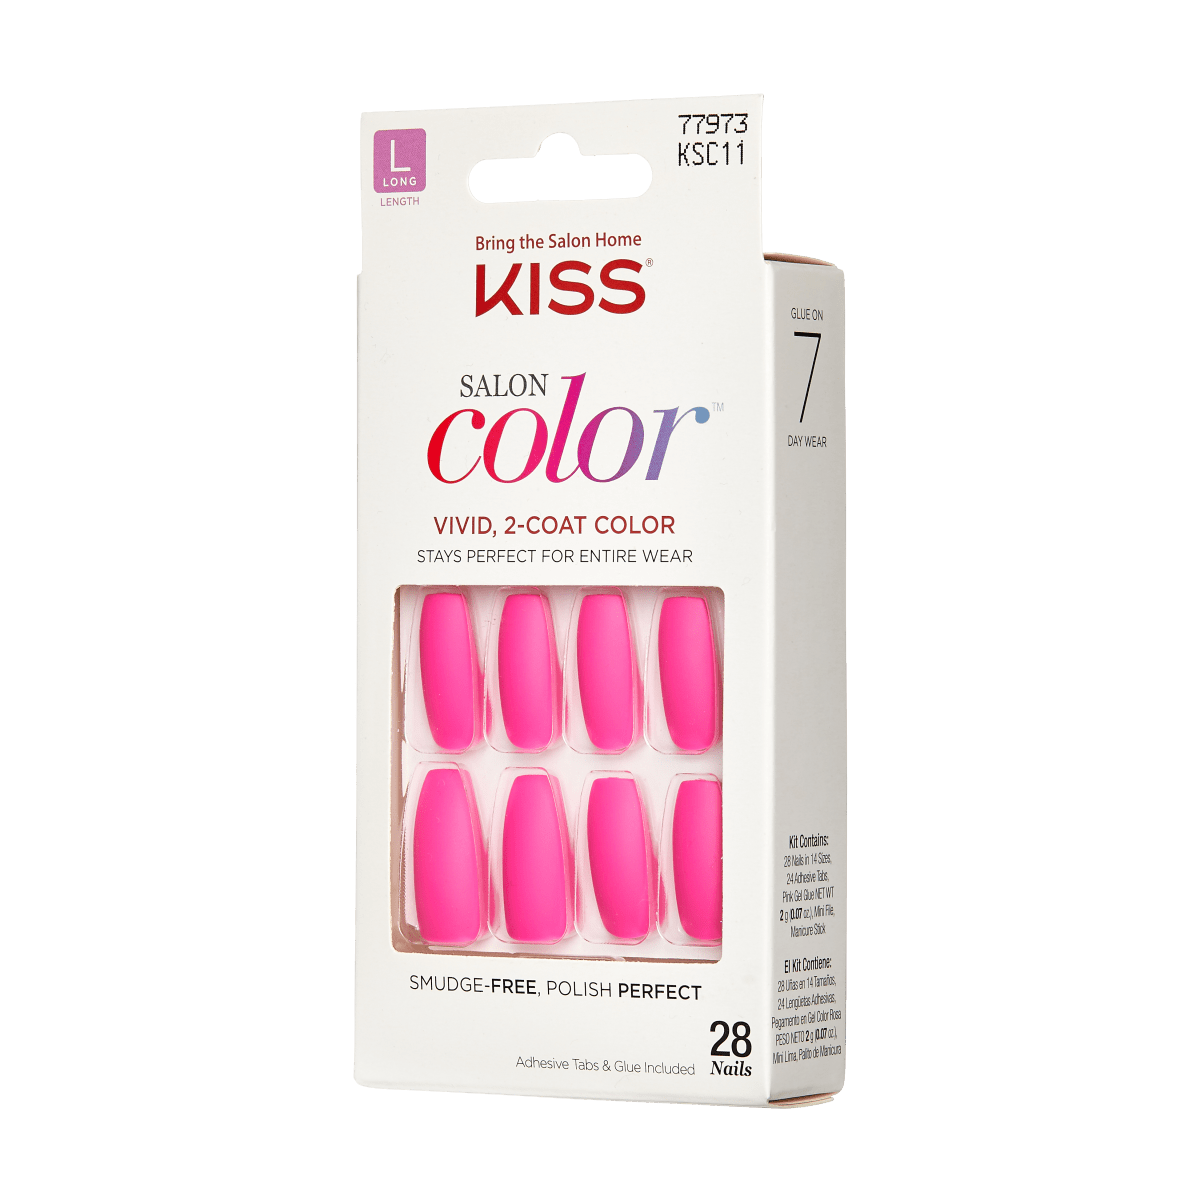 KISS Salon Color Perfection - Step it up